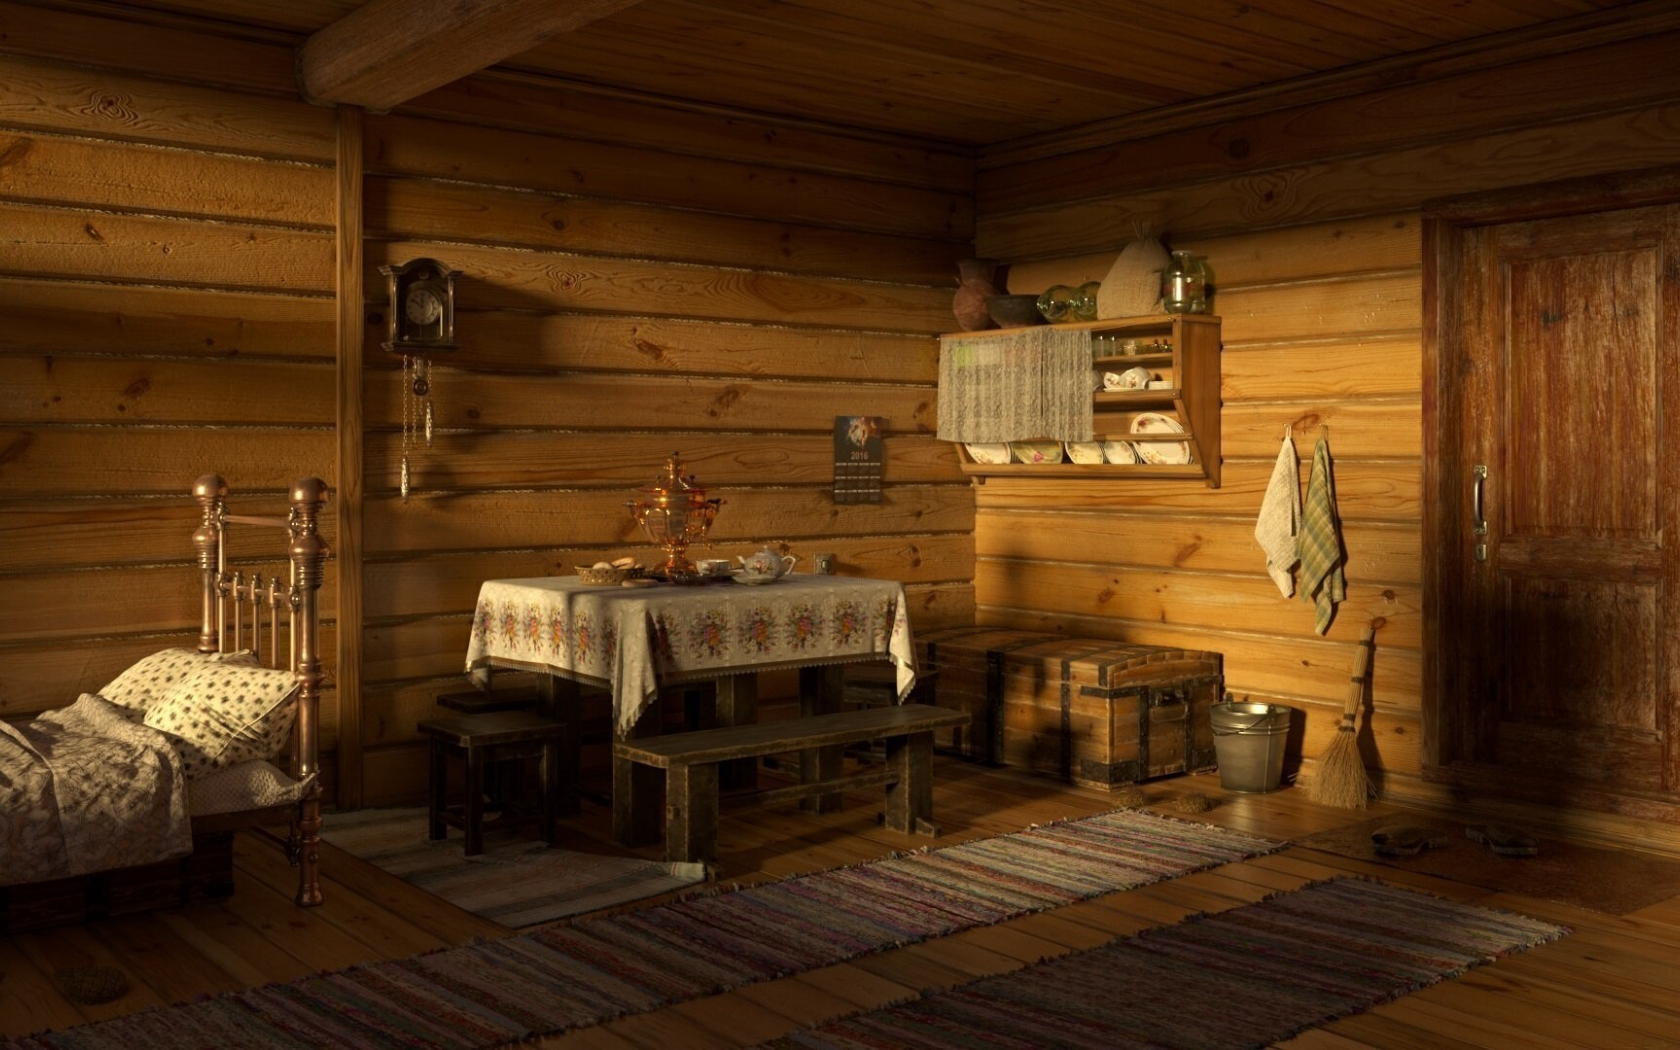 interior, russian hut, hut, table, bed